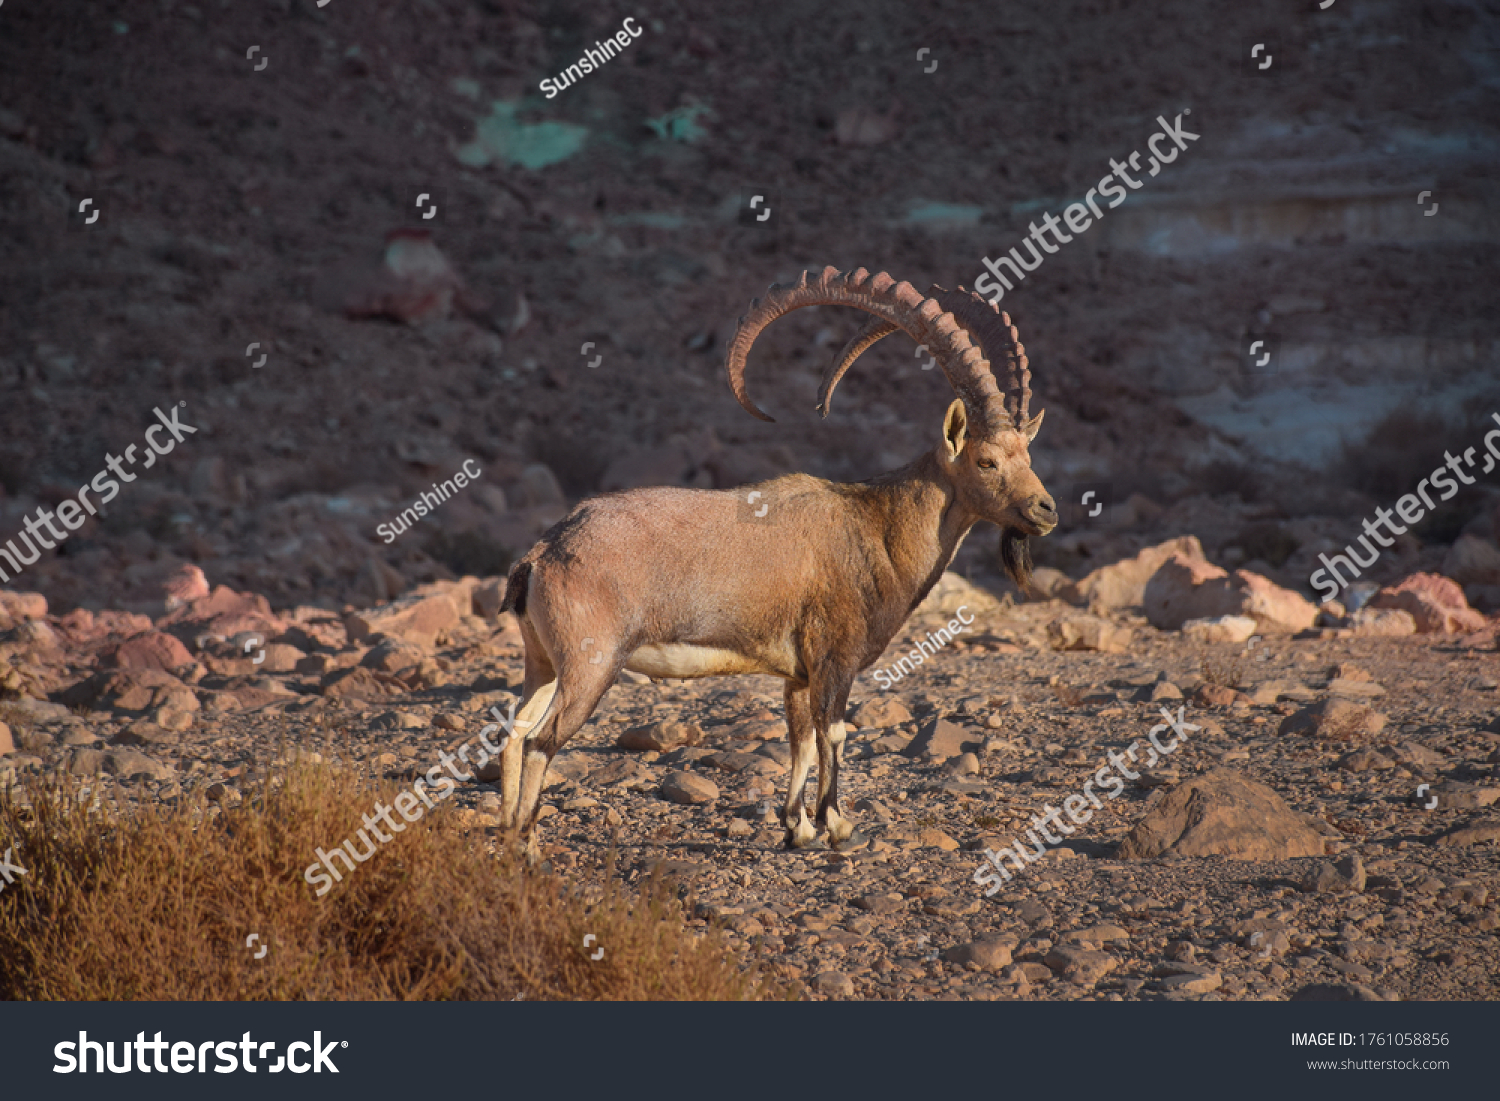 Nubian ibex a desert dwelling goat (capra ibex, capra nubiana) biblical animal in Judean (Judea) desert and the Negev, southern Israel. black and white image, animal in nature reserve (wildlife) #1761058856